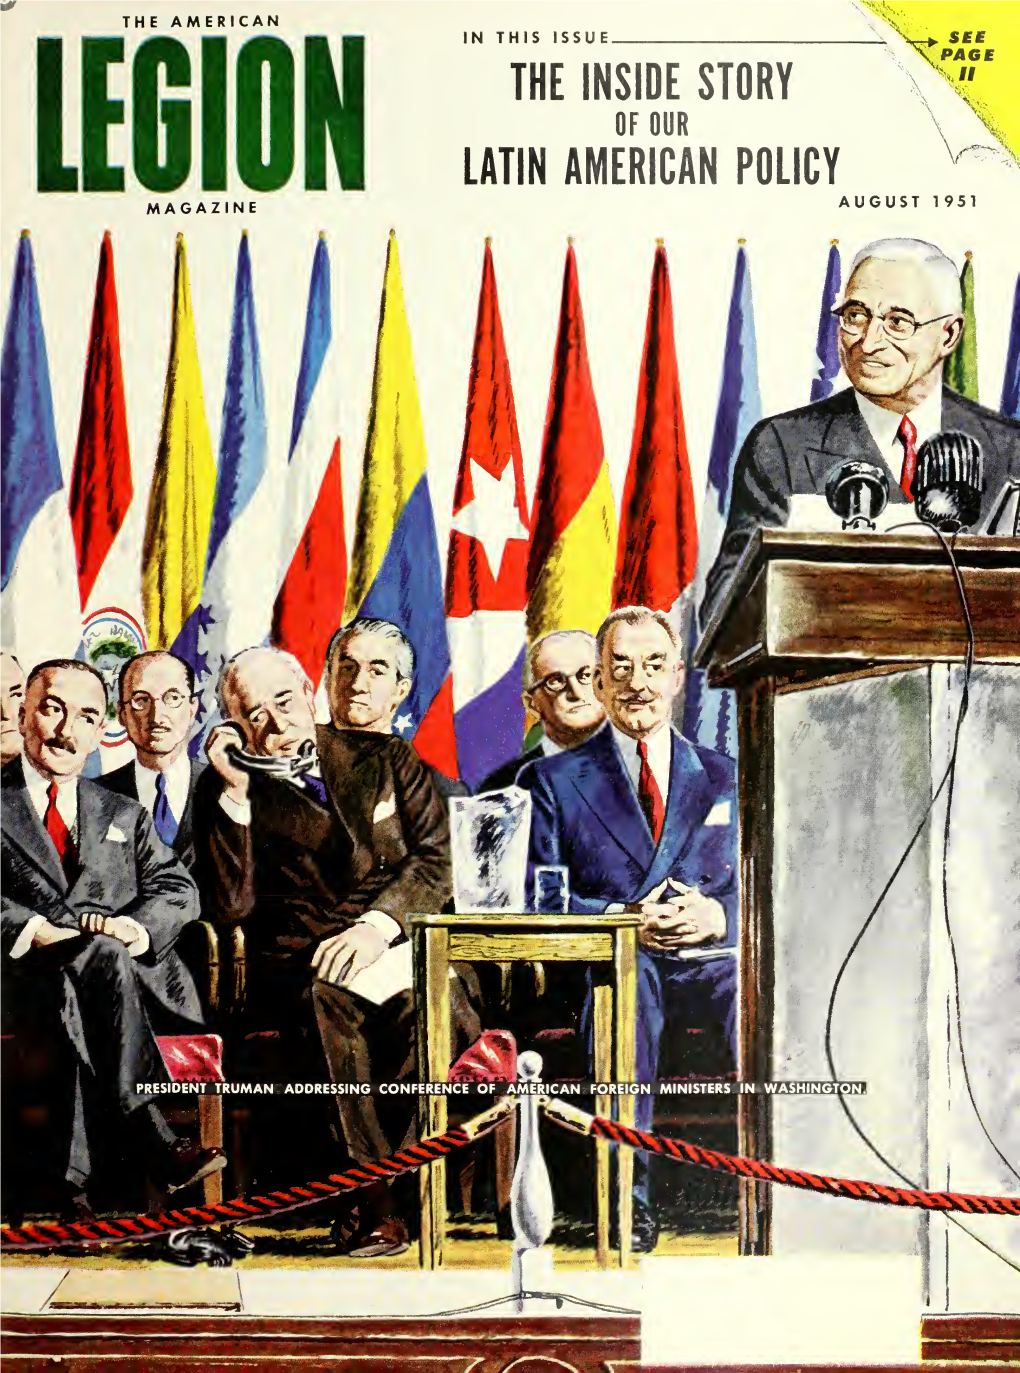 The American Legion Magazine [Volume 51, No. 2 (August 1951)]